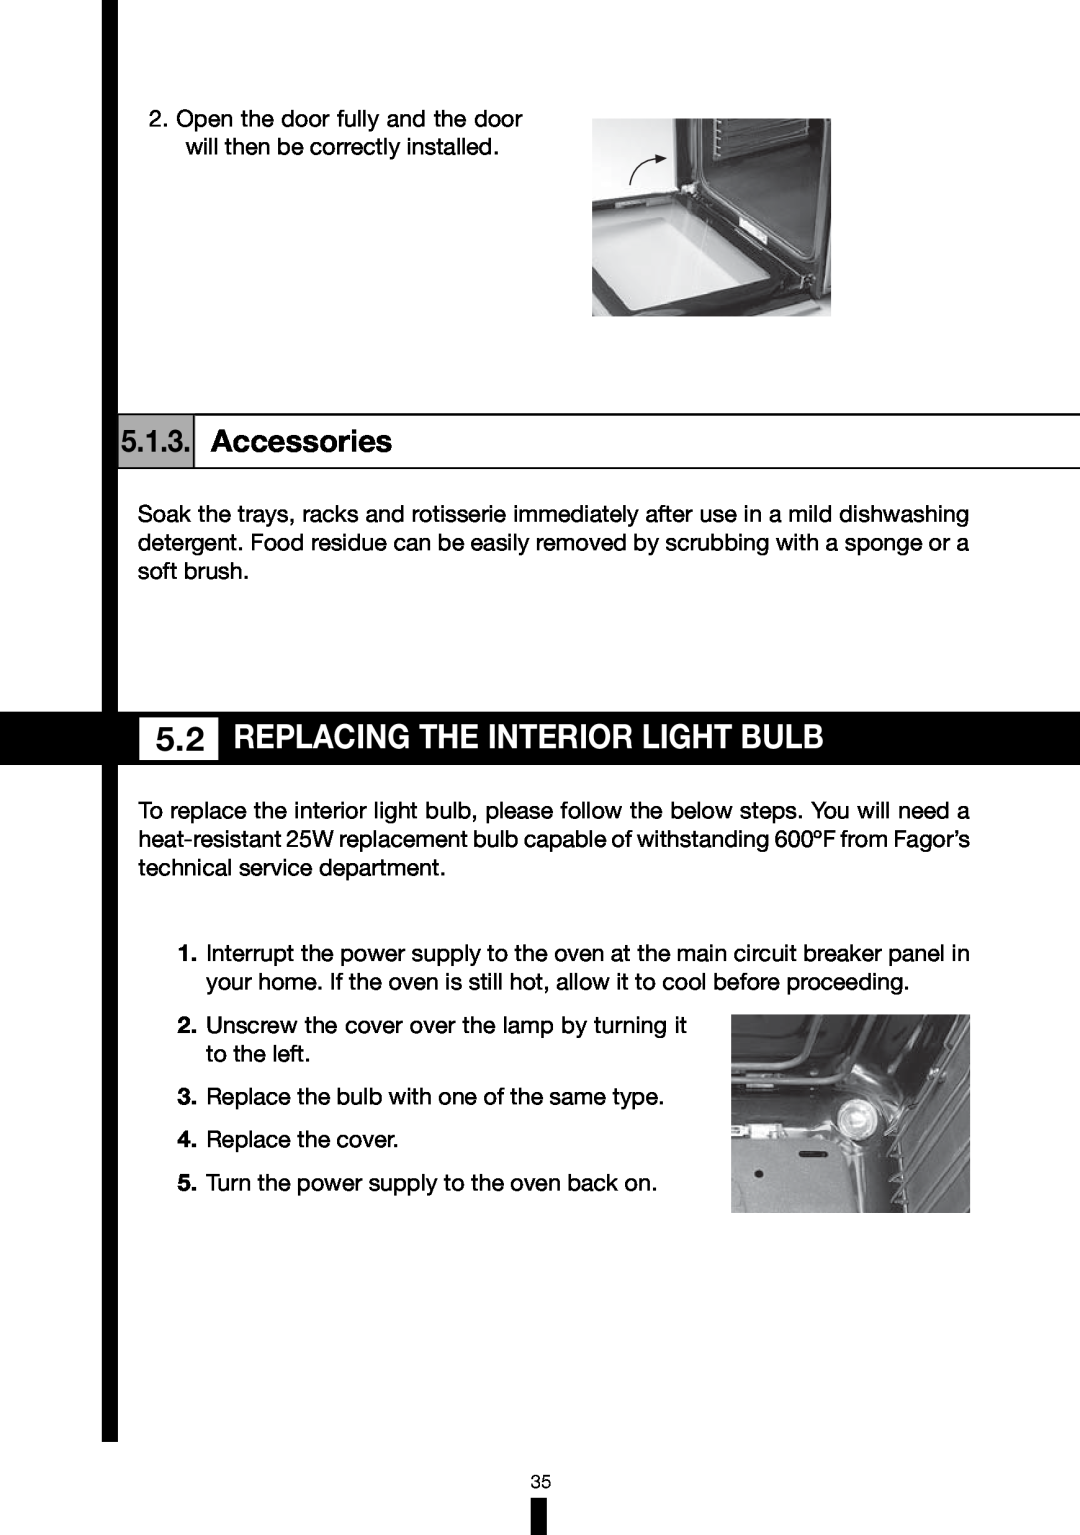 Fagor America RFA-244 DF, RFA-365 DF manual Replacing The Interior Light Bulb, Accessories 